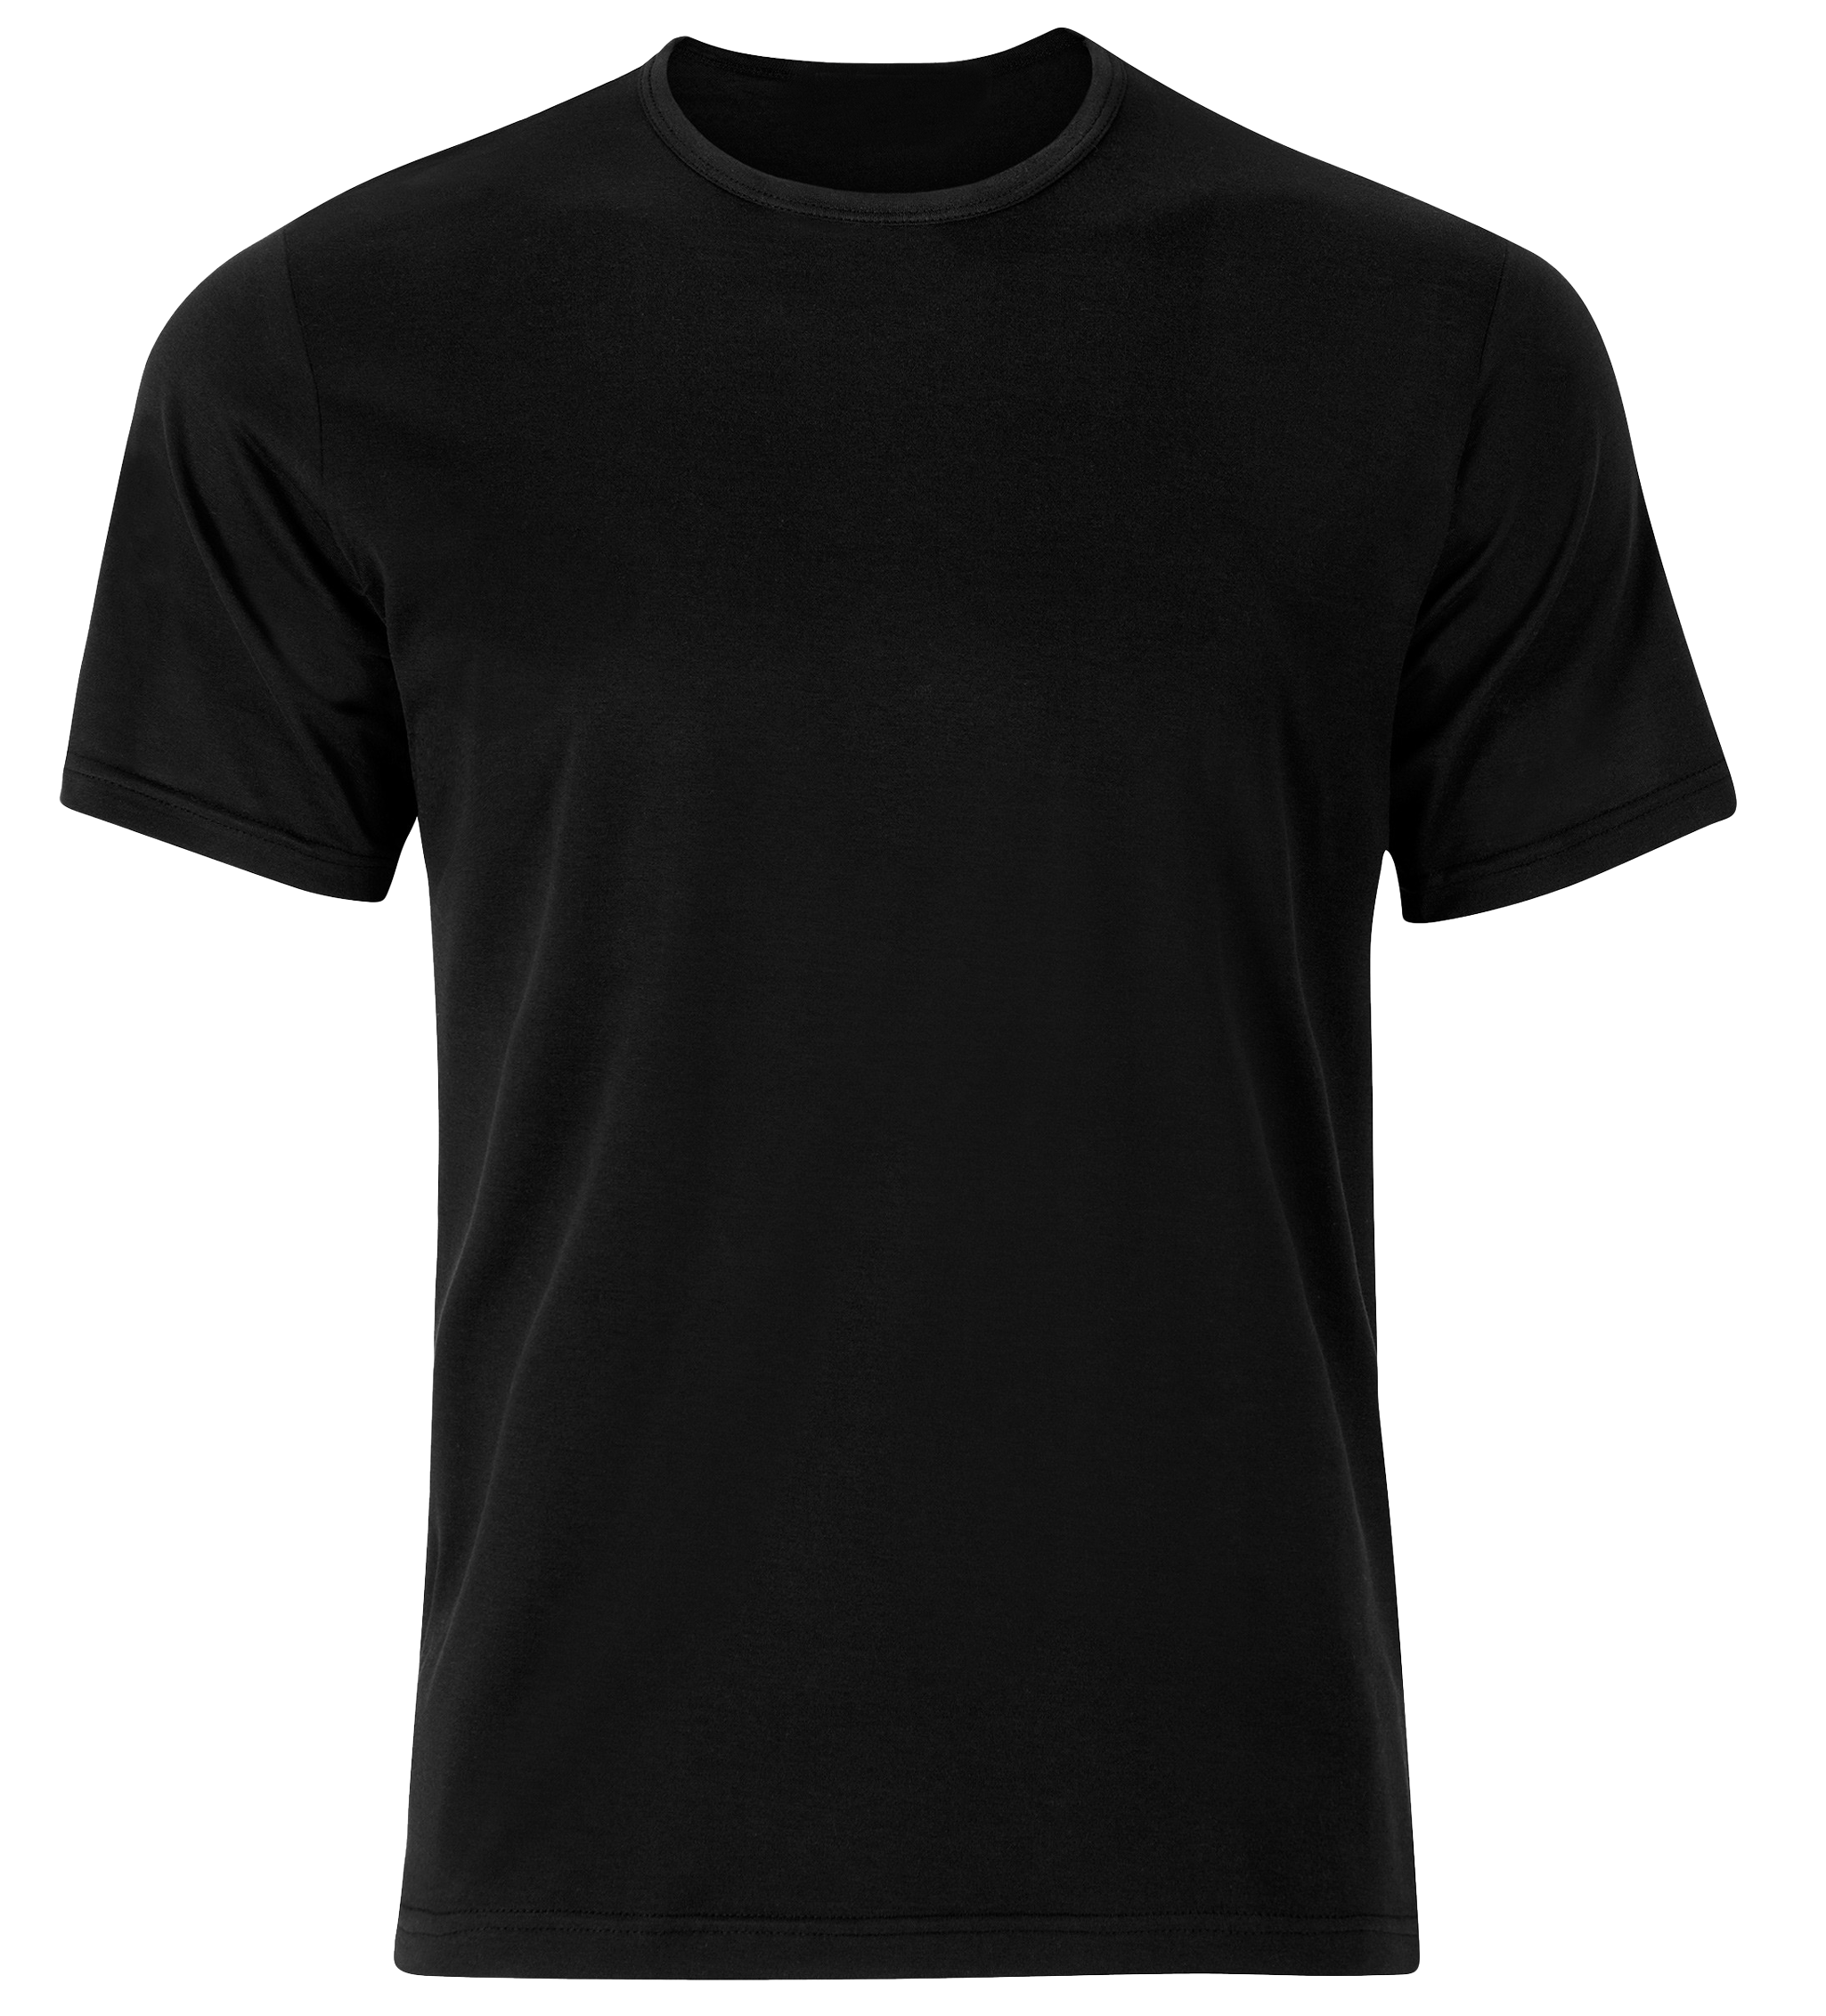 Download Transparent High Resolution Transparent Black T Shirt Png ...